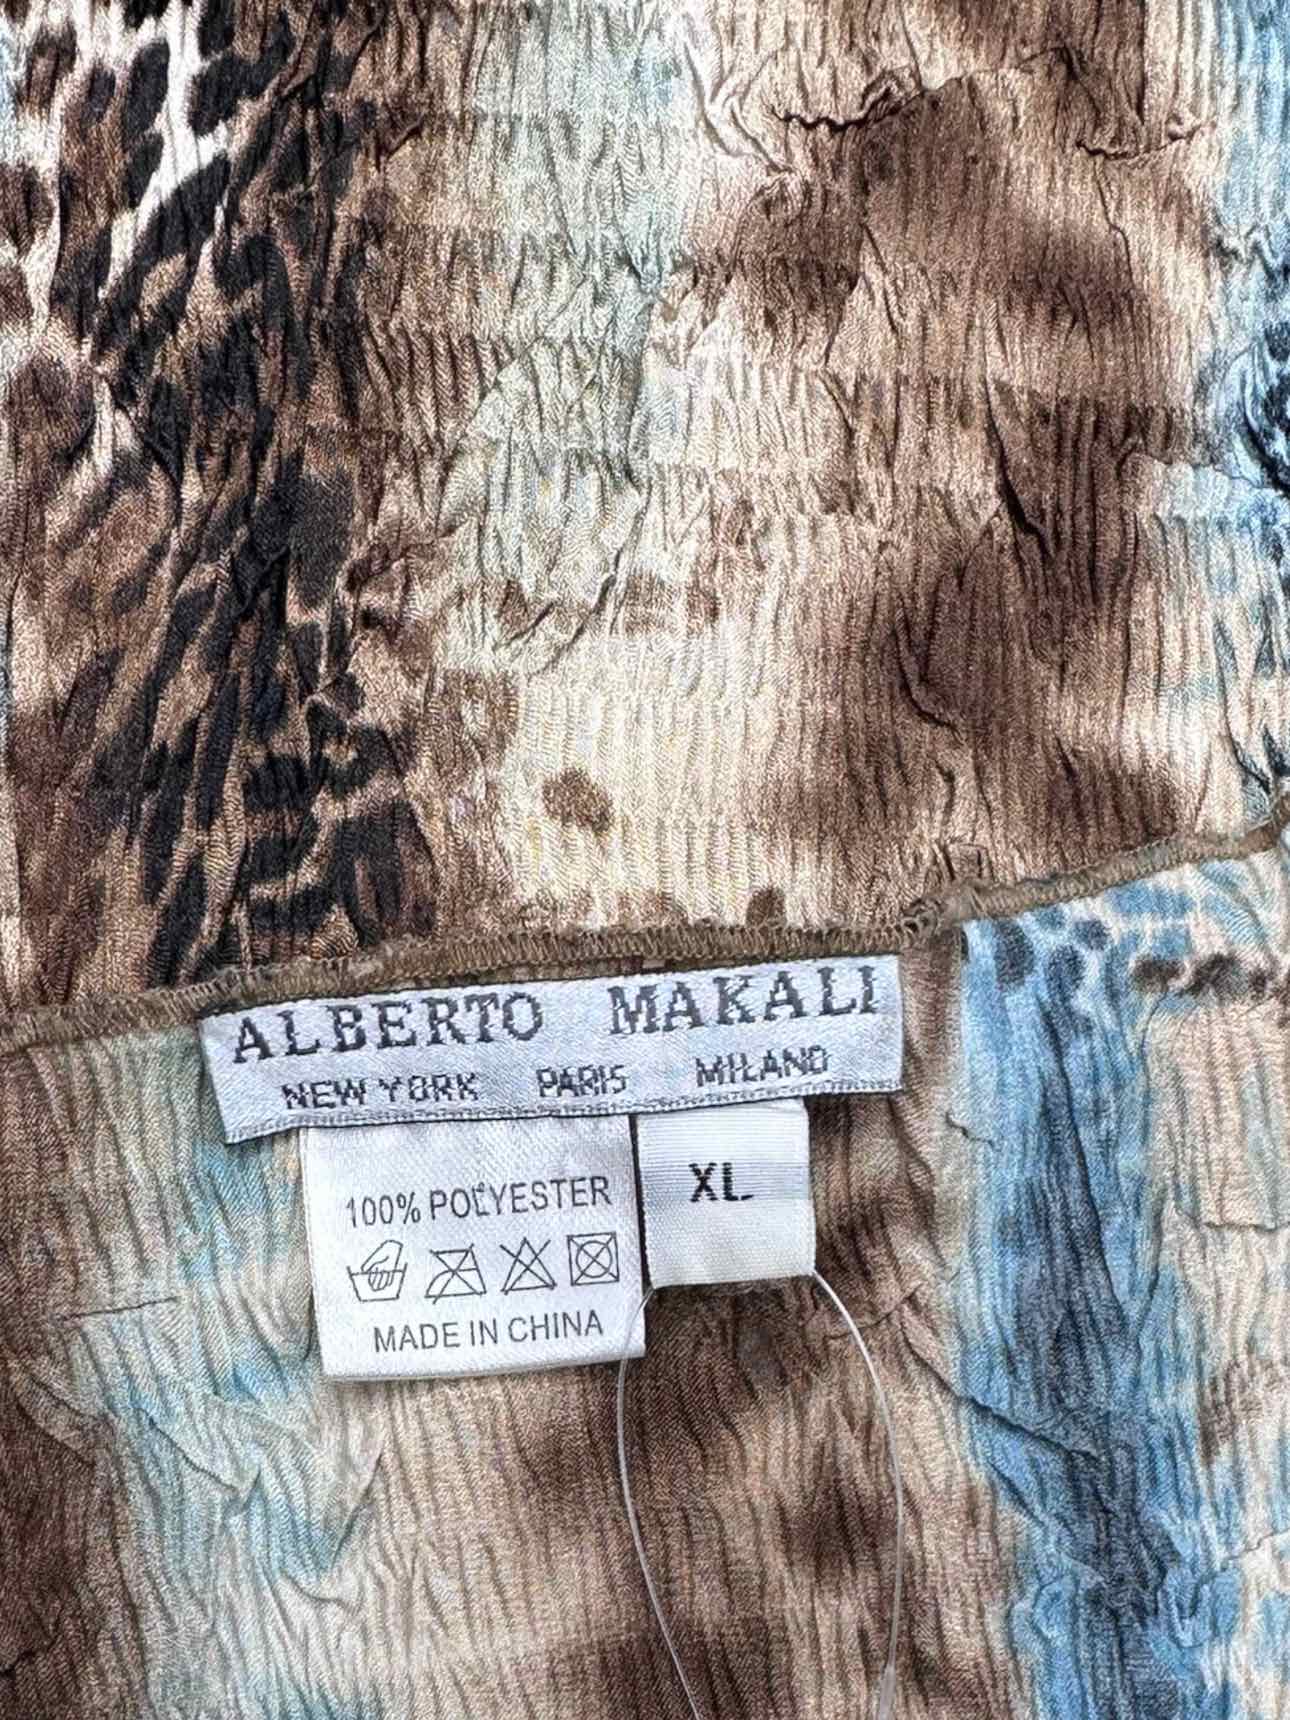 Alberto Makali Bohemian Popover Blouse Size XL